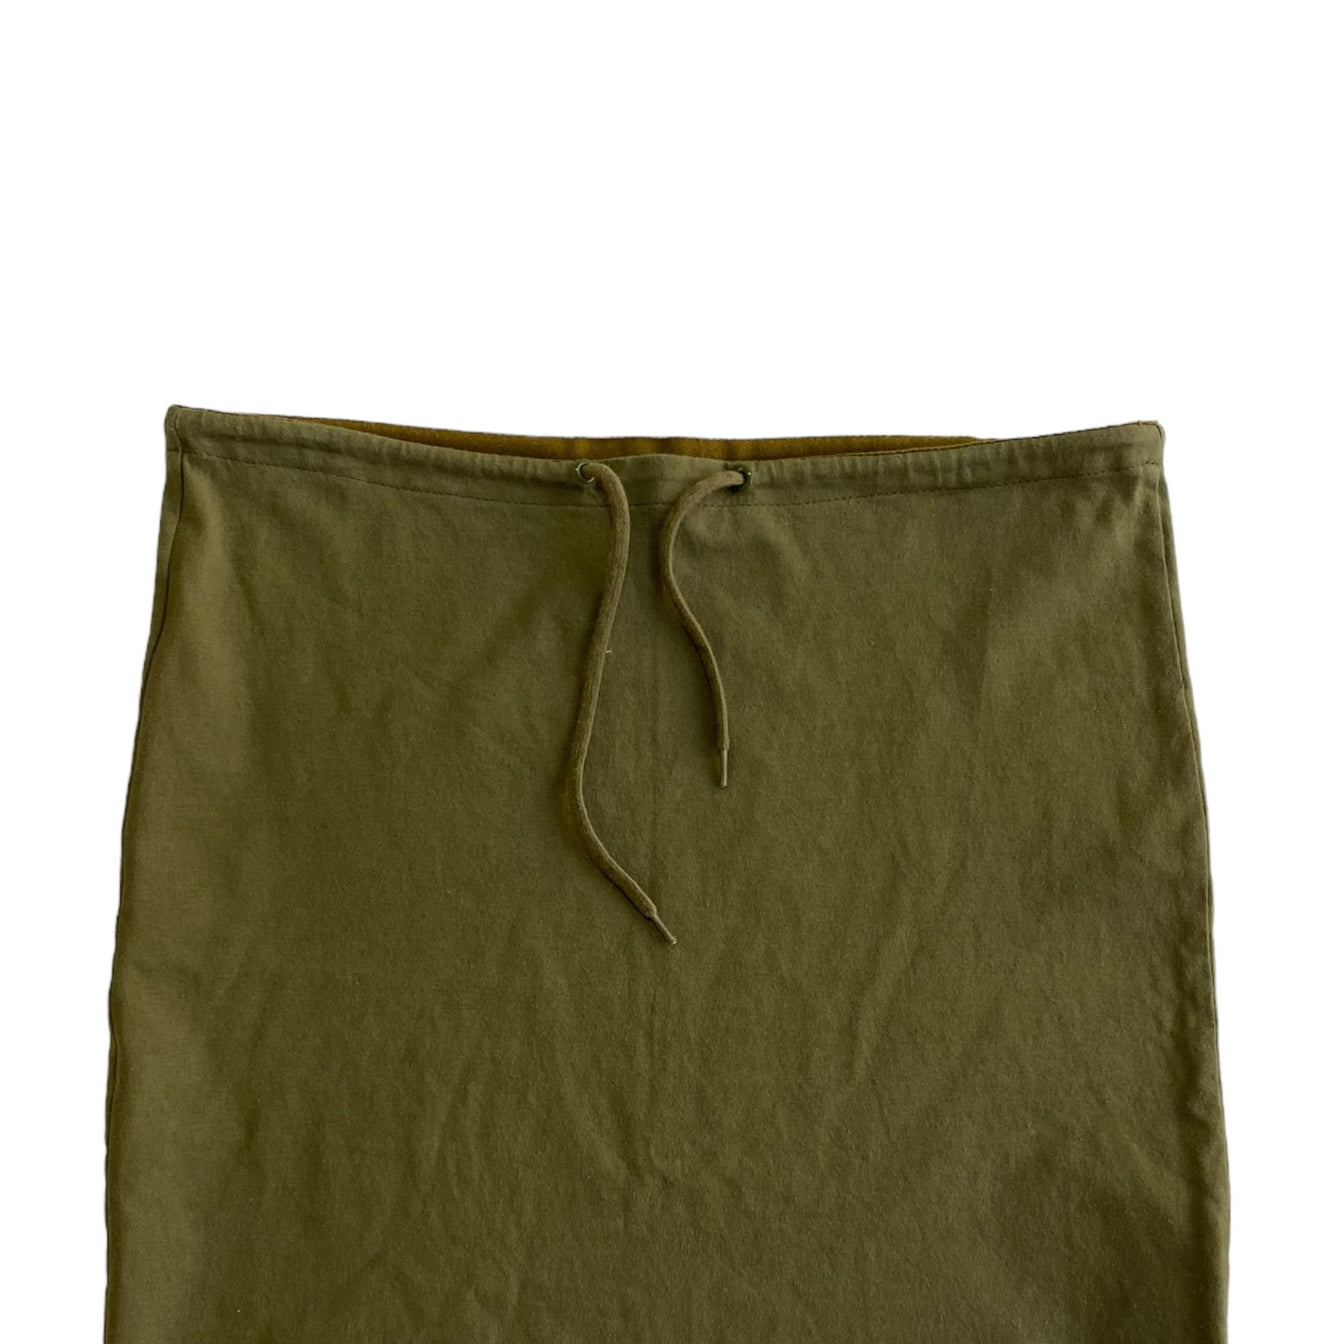 1999 Helmut Lang Adjustable Waist Mini Skirt (39W)